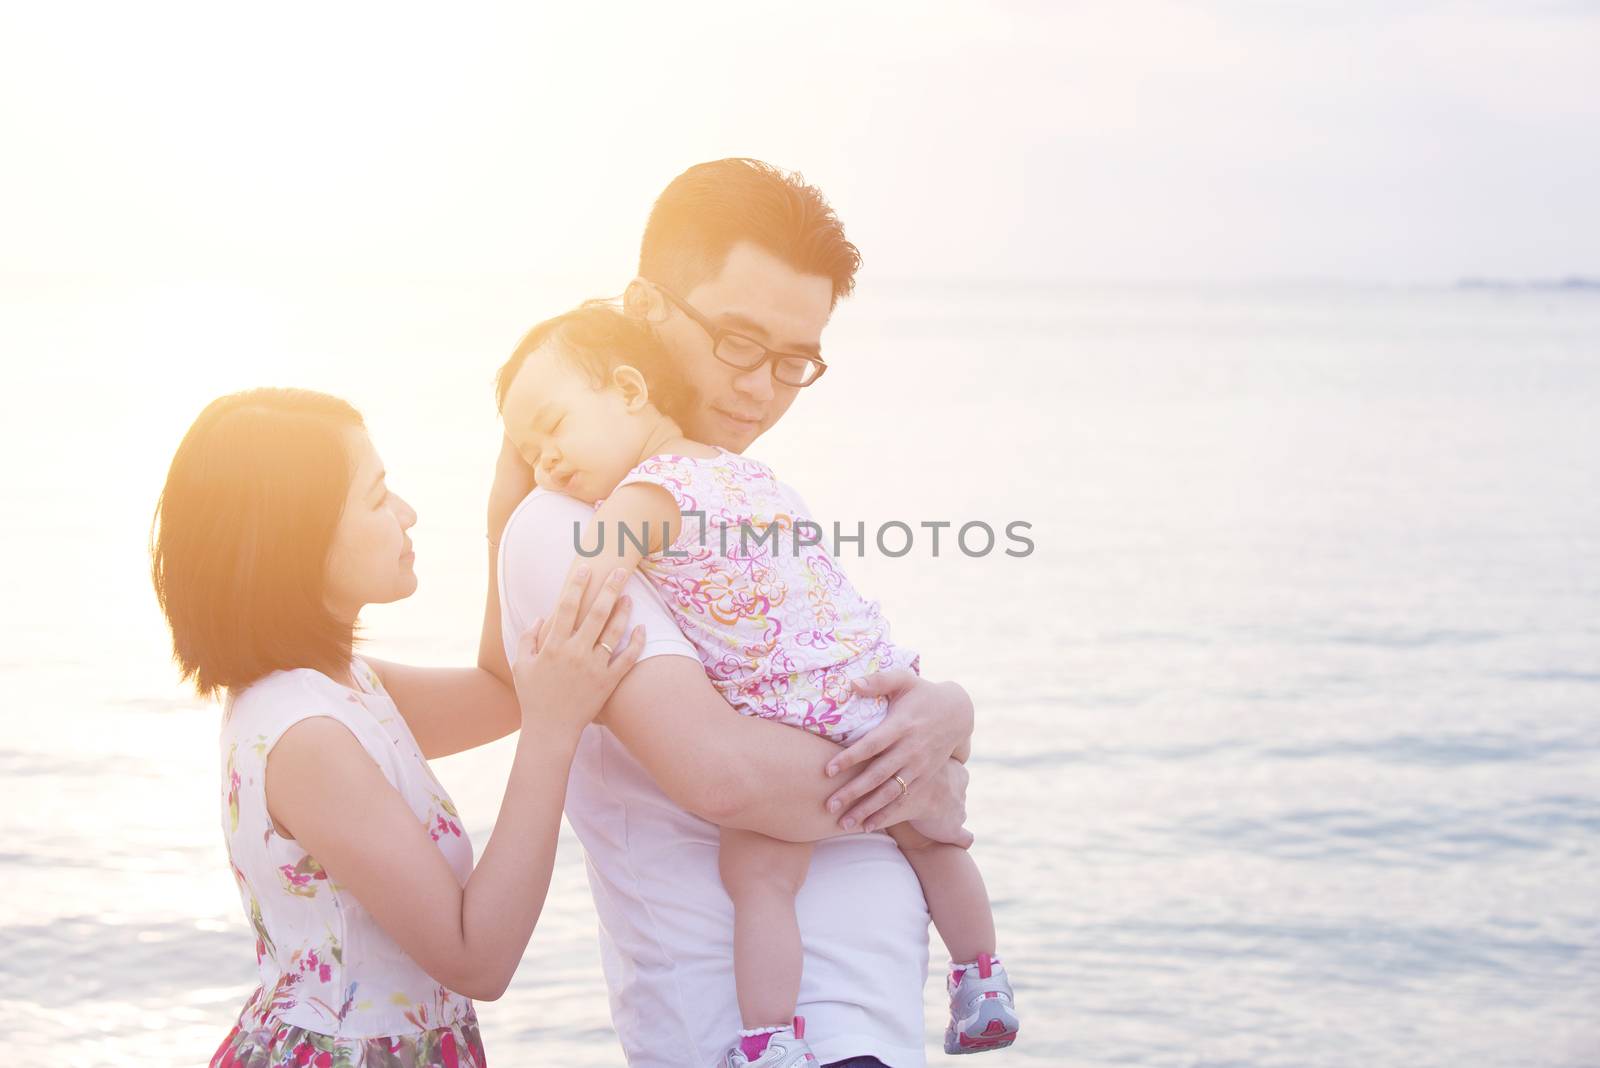 Family enjoying summer holiday at coastline by szefei